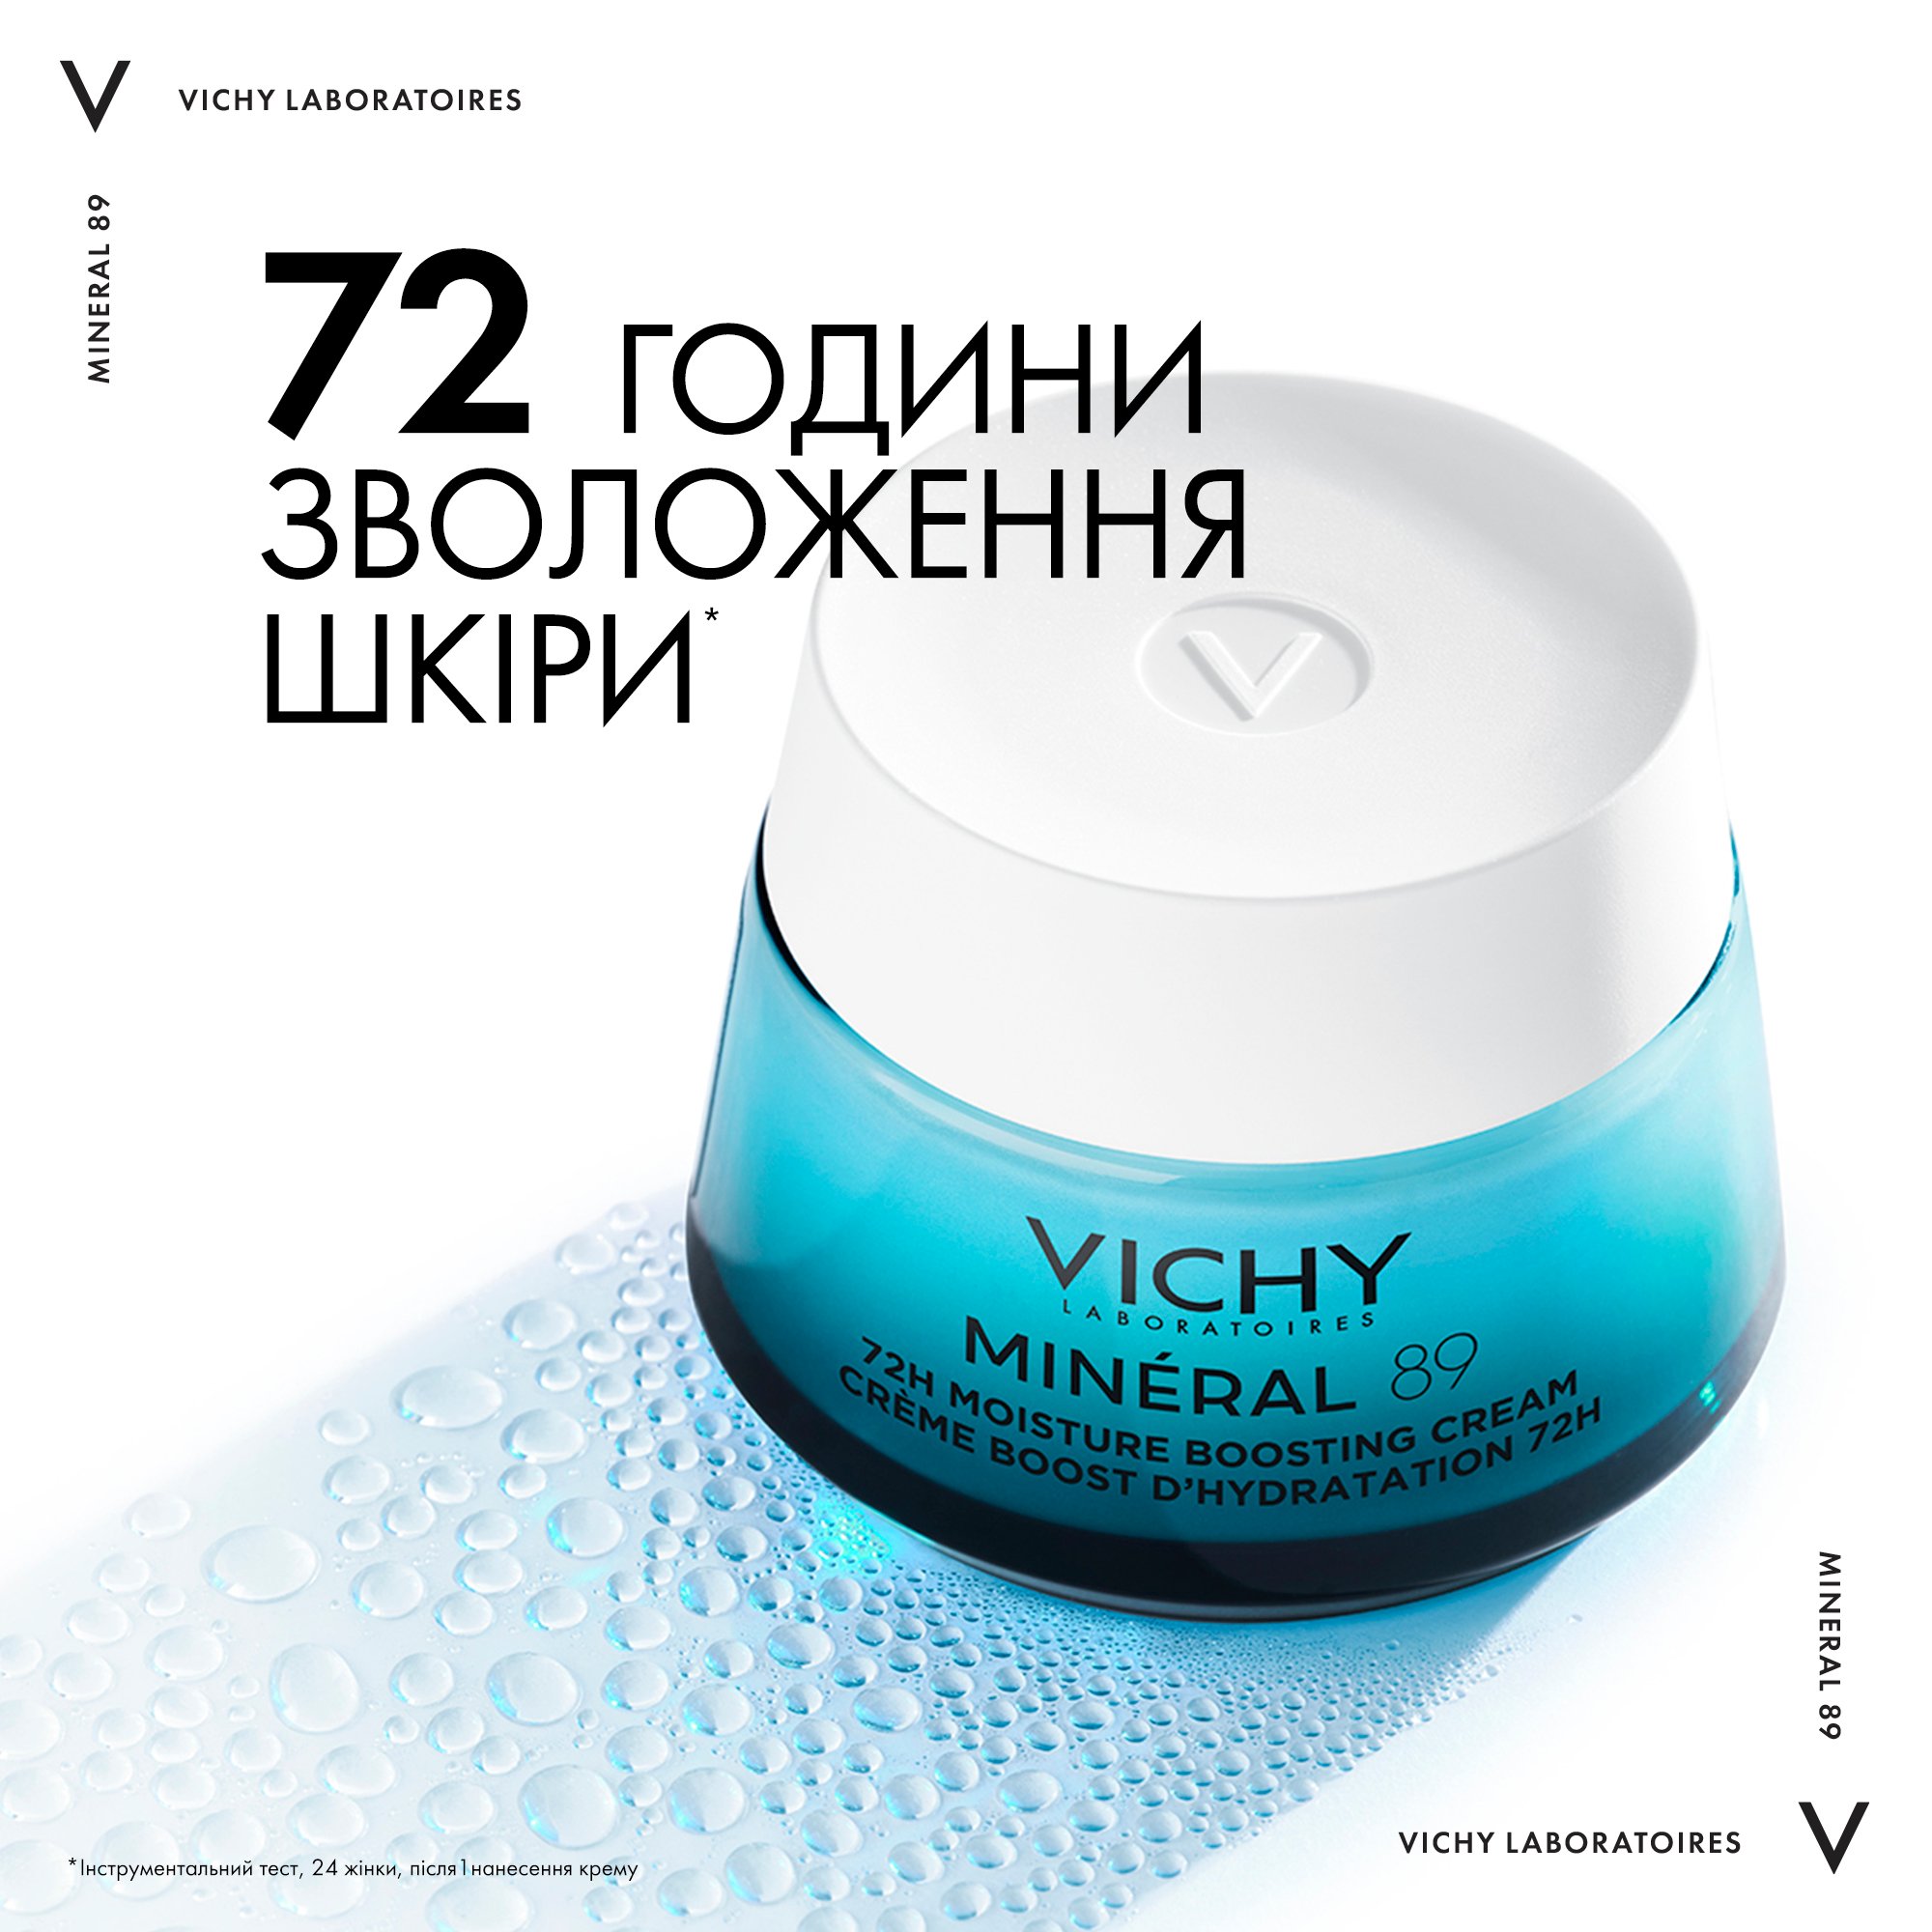 Насыщенный крем для сухой кожи Vichy Mineral 89 Rich 72H Moisture Boosting Cream, 50 мл - фото 3